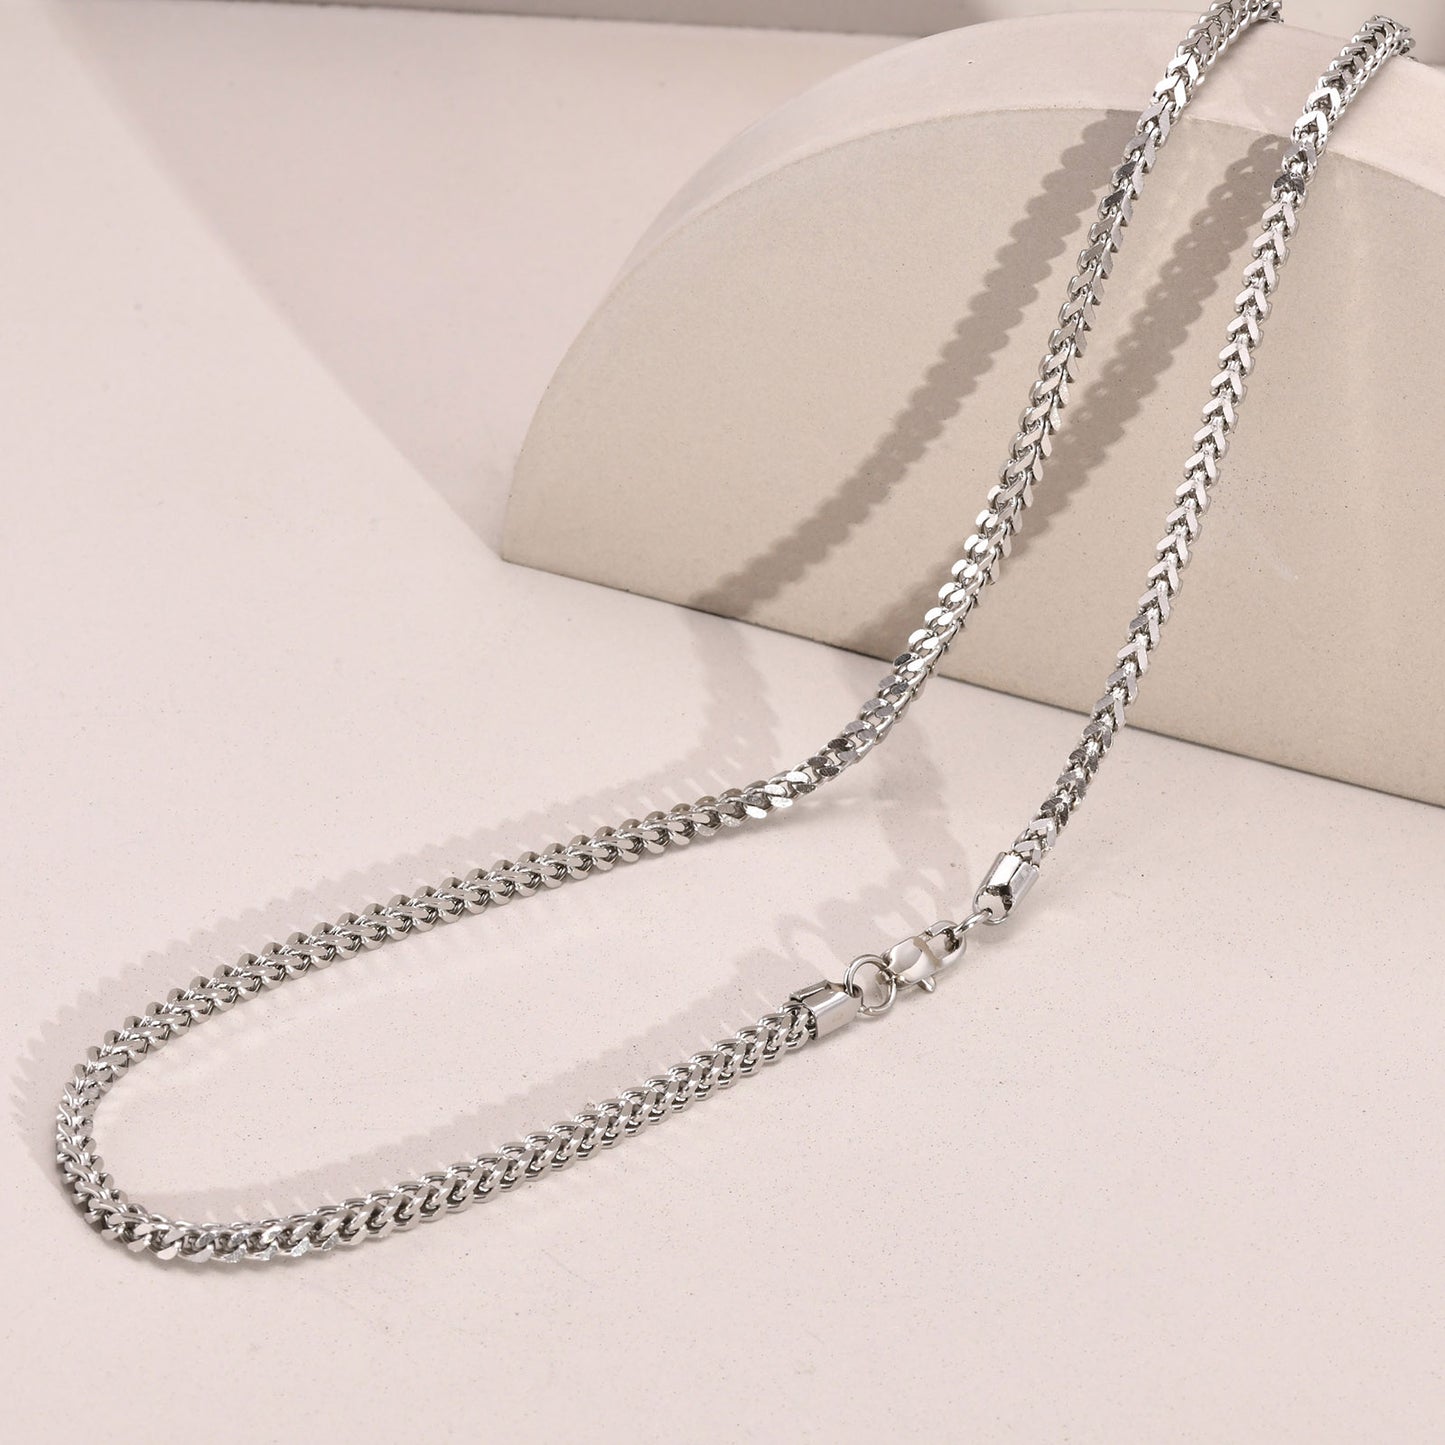 Franco Chain Necklace